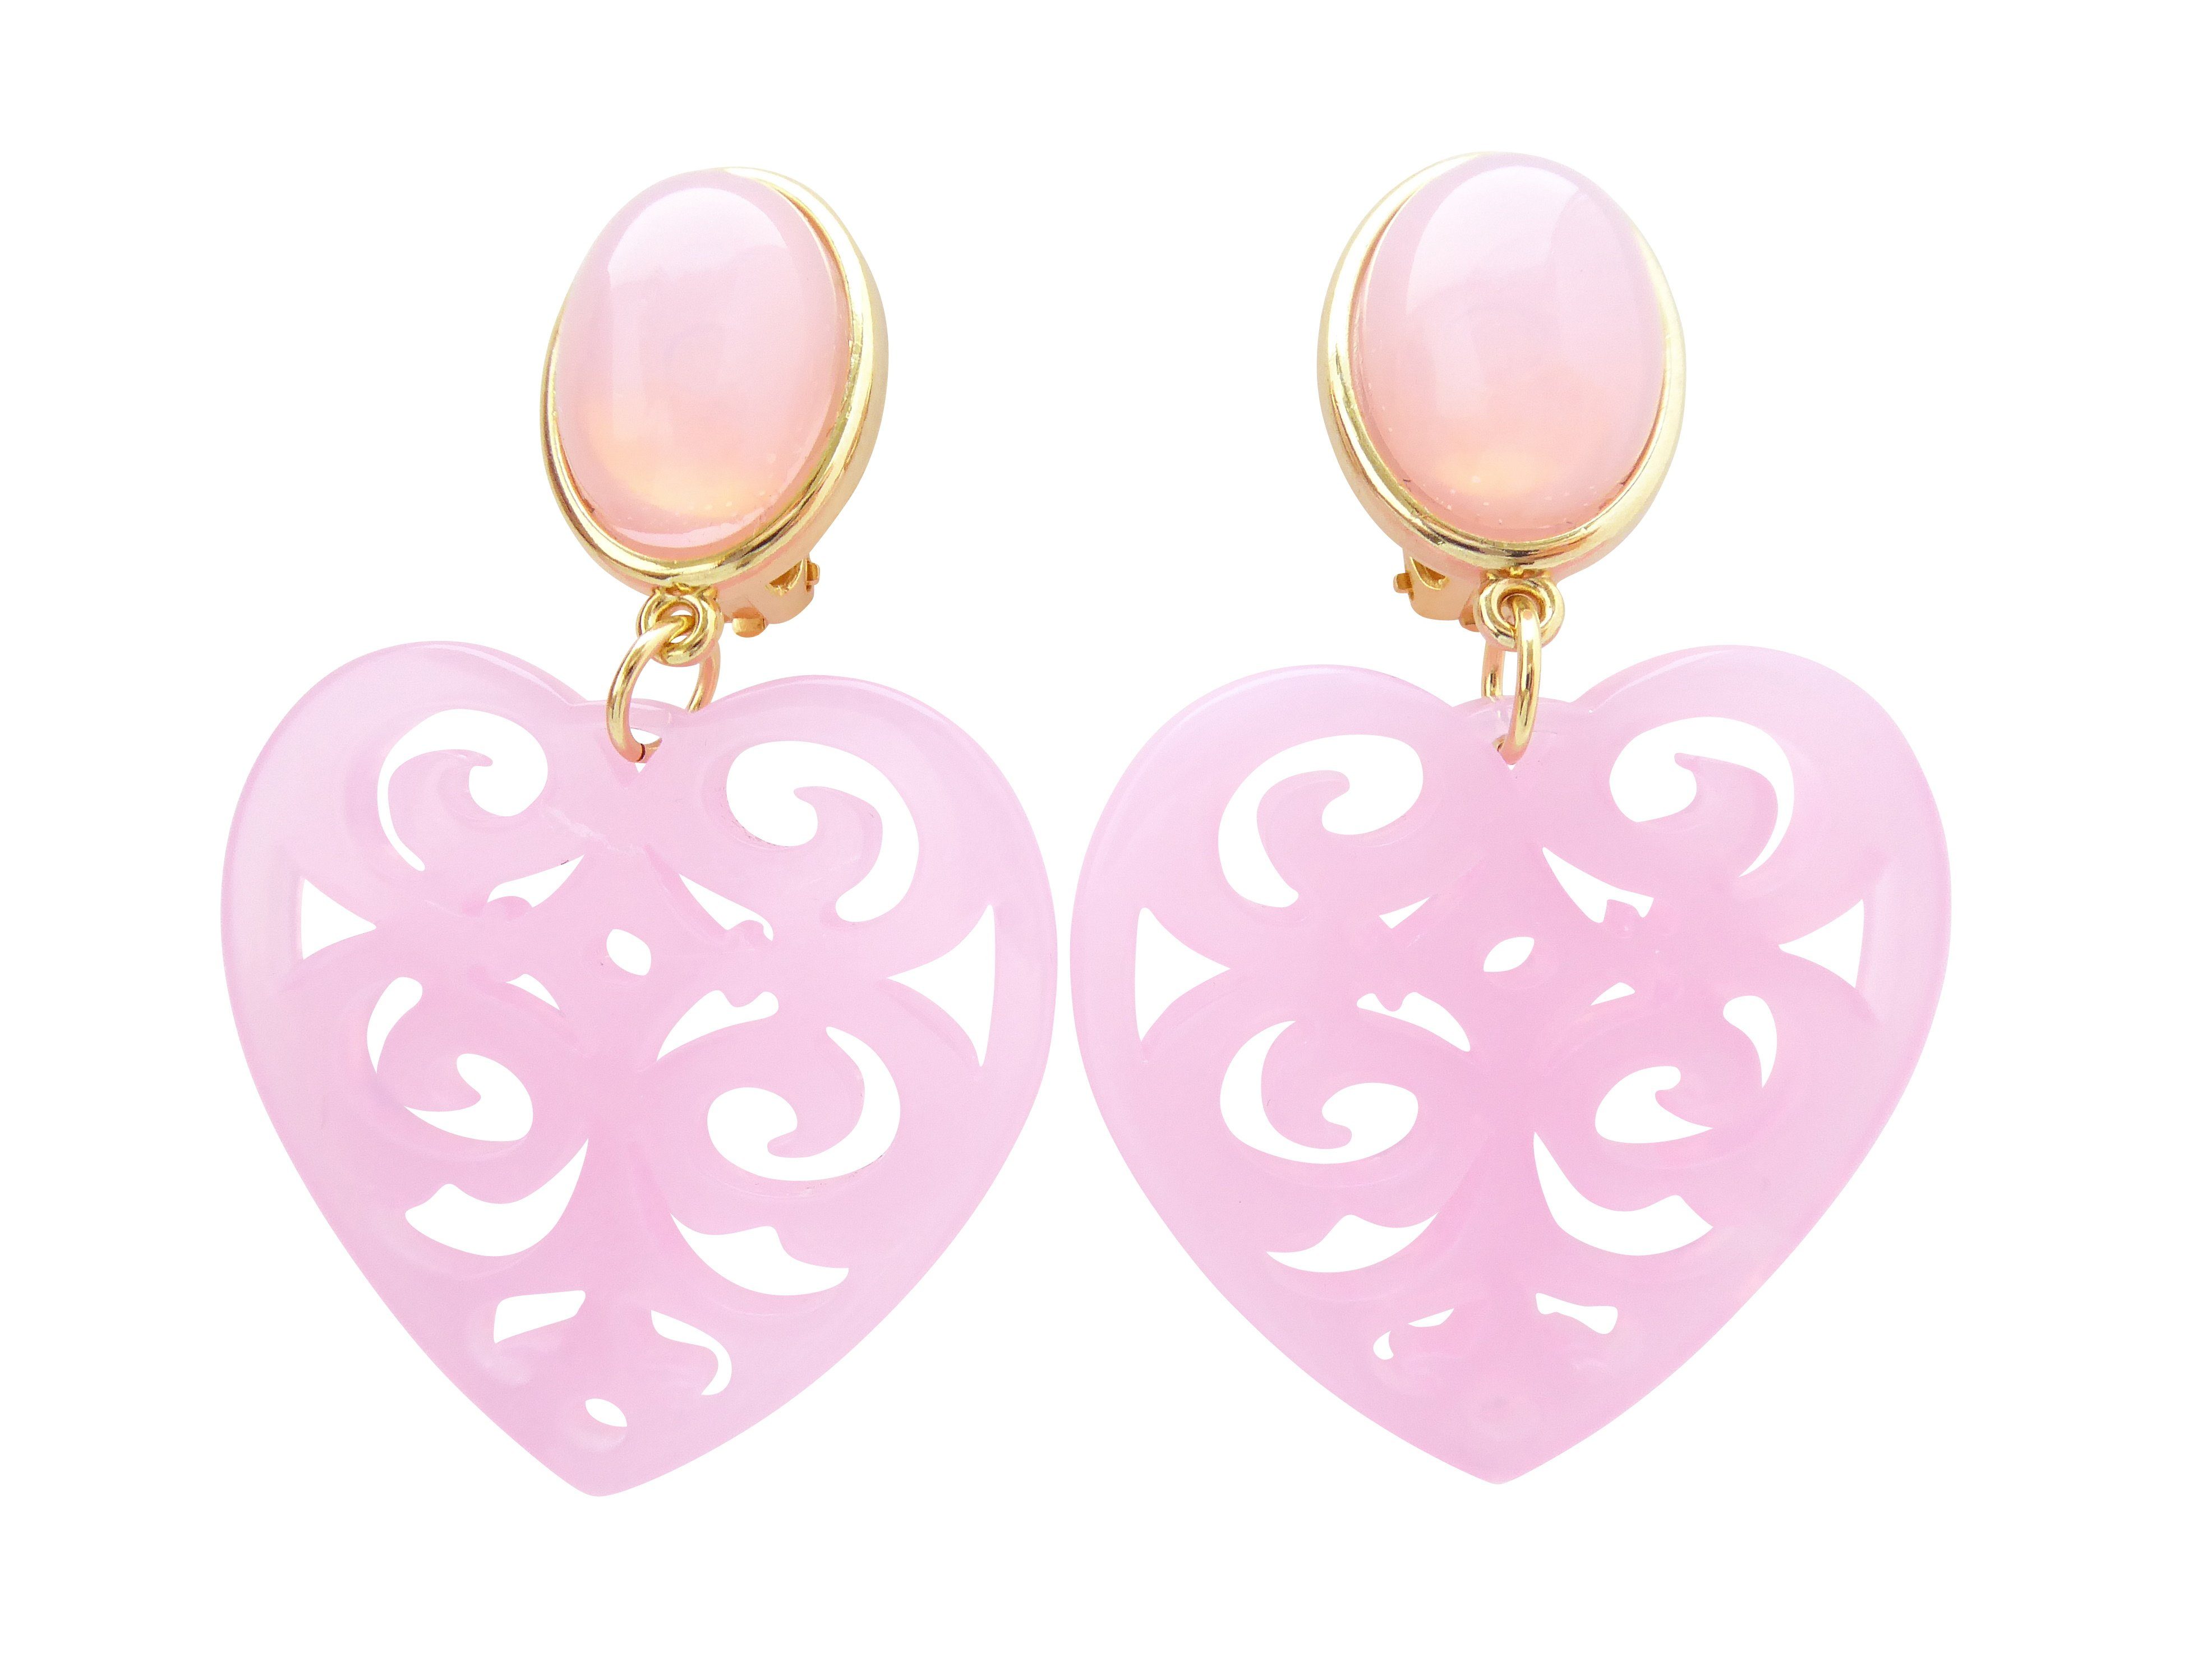 Mugello Paar Ohrclips »Bavaria Clips rosa Herz elegante Dirndl-Ohrringe«,  made in Germany JustWin online kaufen | OTTO